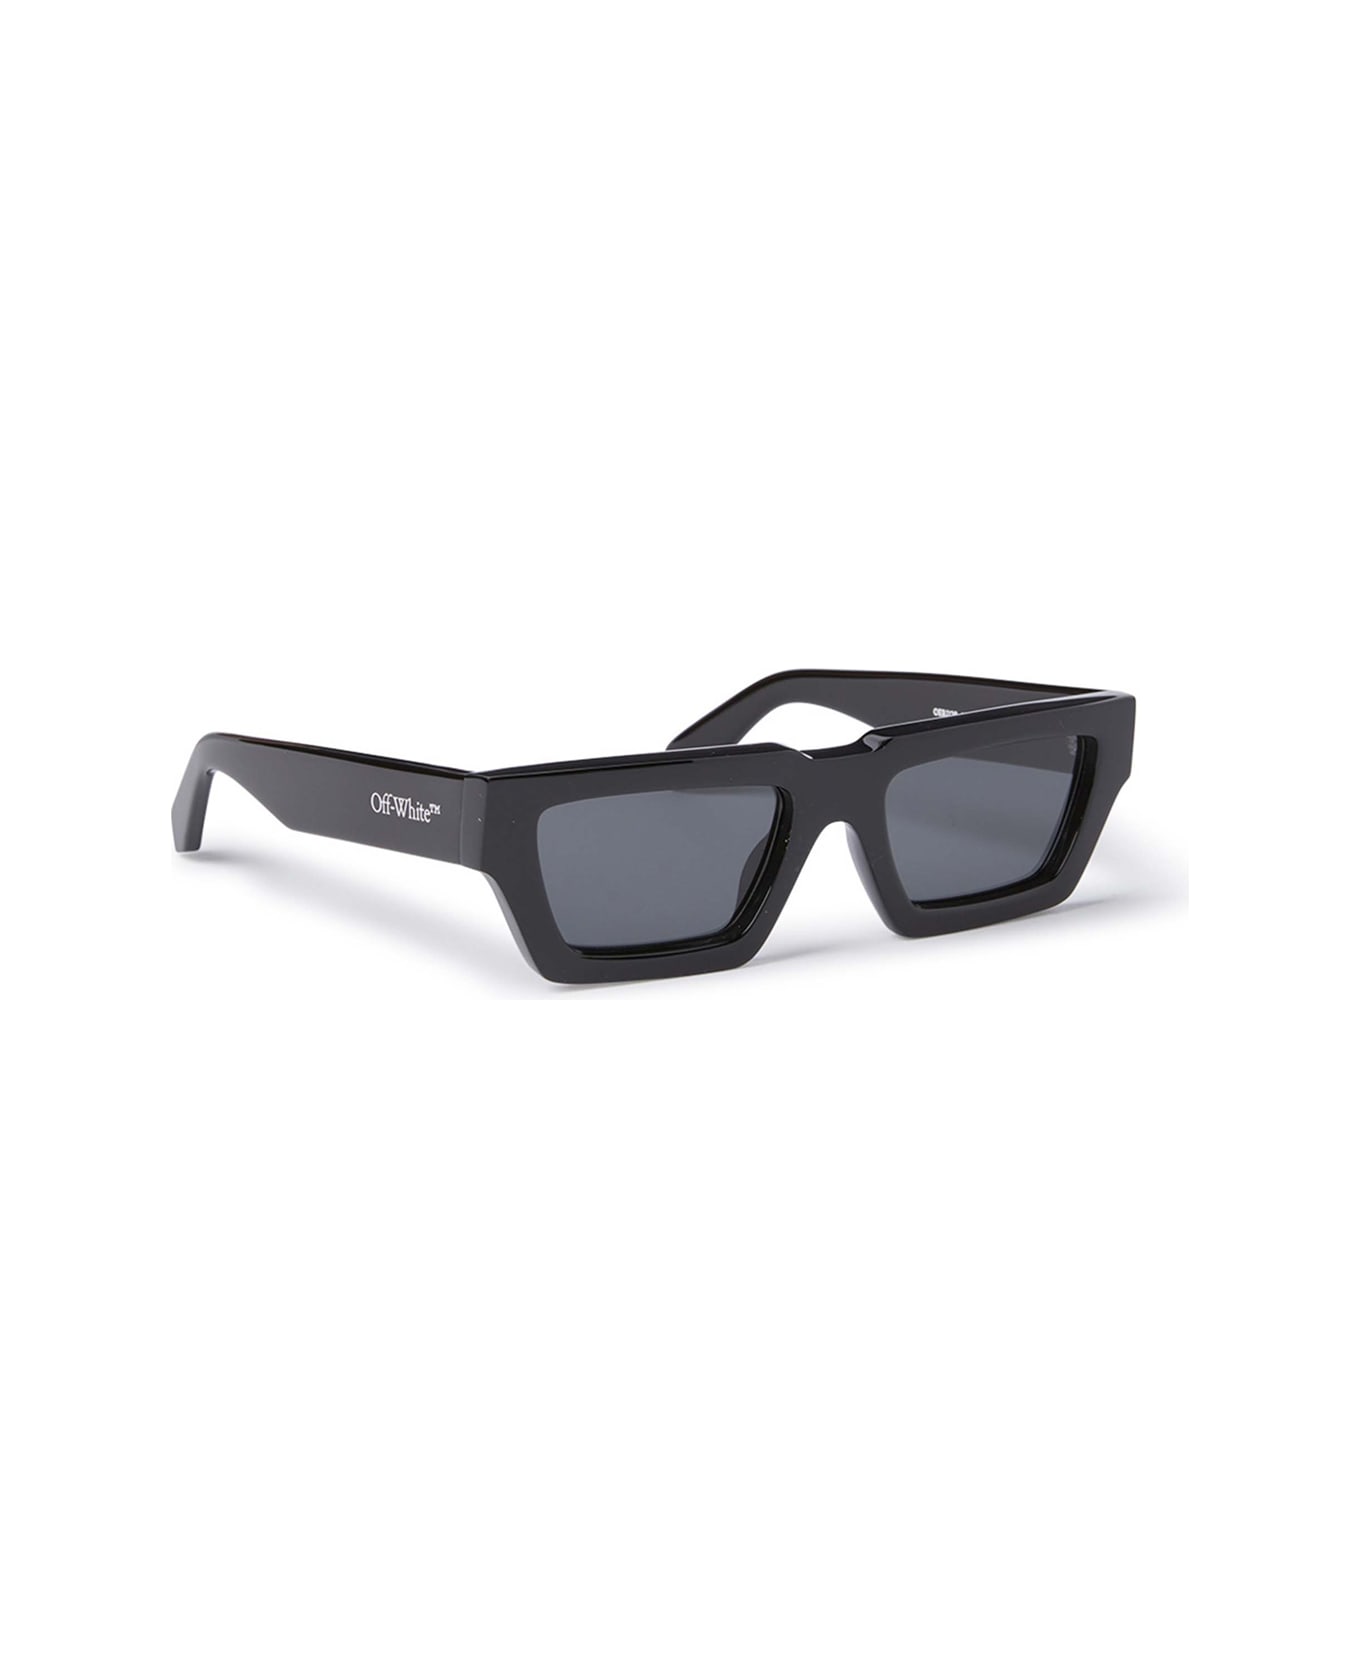 Off-White Oeri129 Manchester 1007 Black Sunglasses - Nero サングラス